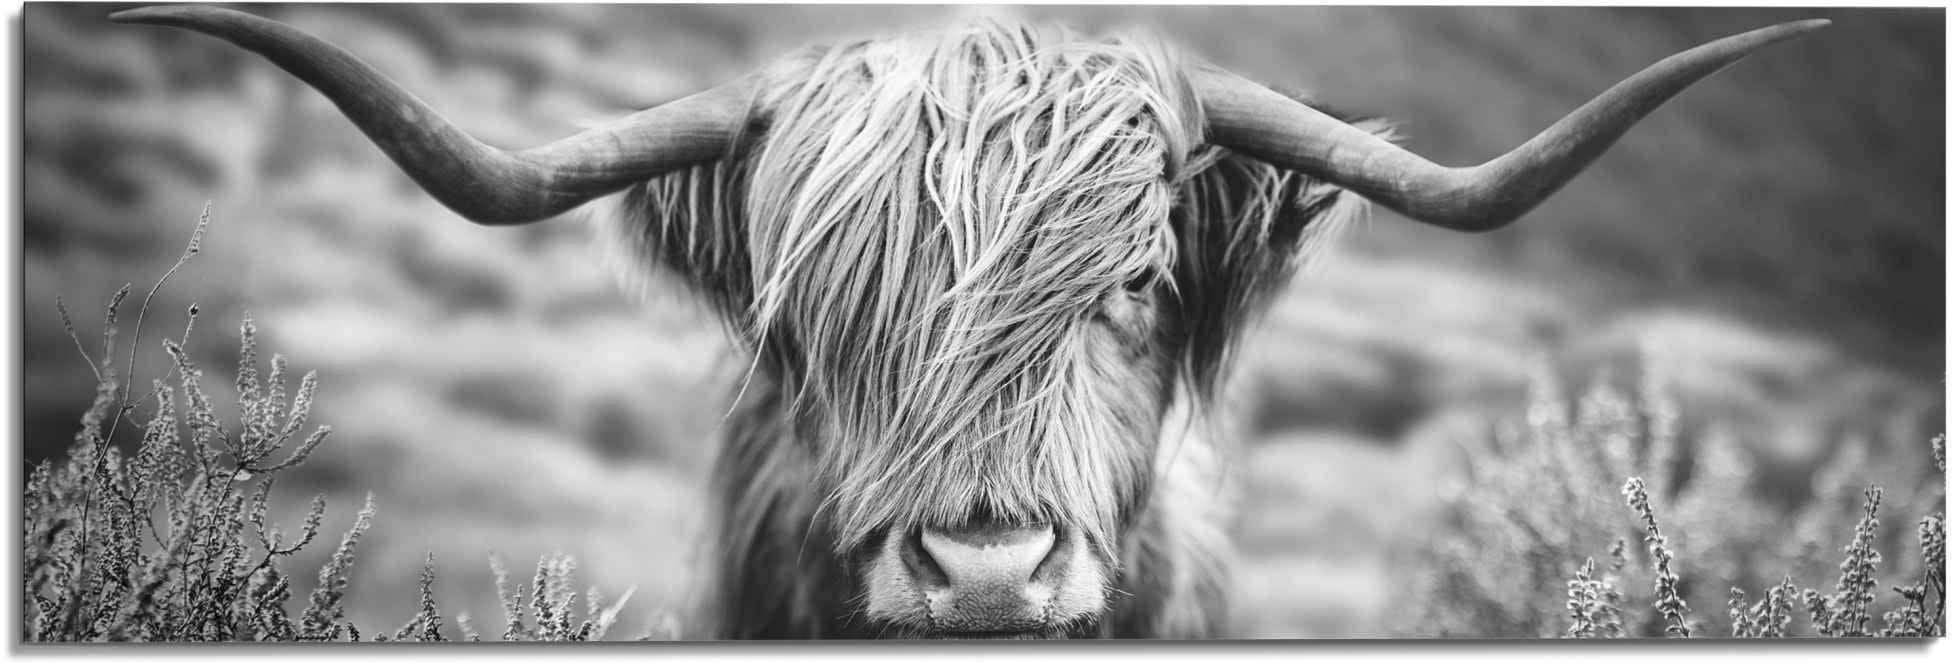 St.) Tiermotiv Wandbild - Hochlandrind »Wandbild Bild«, Kuh, Reinders! bequem kaufen Nahaufnahme Bulle Highlander (1 -